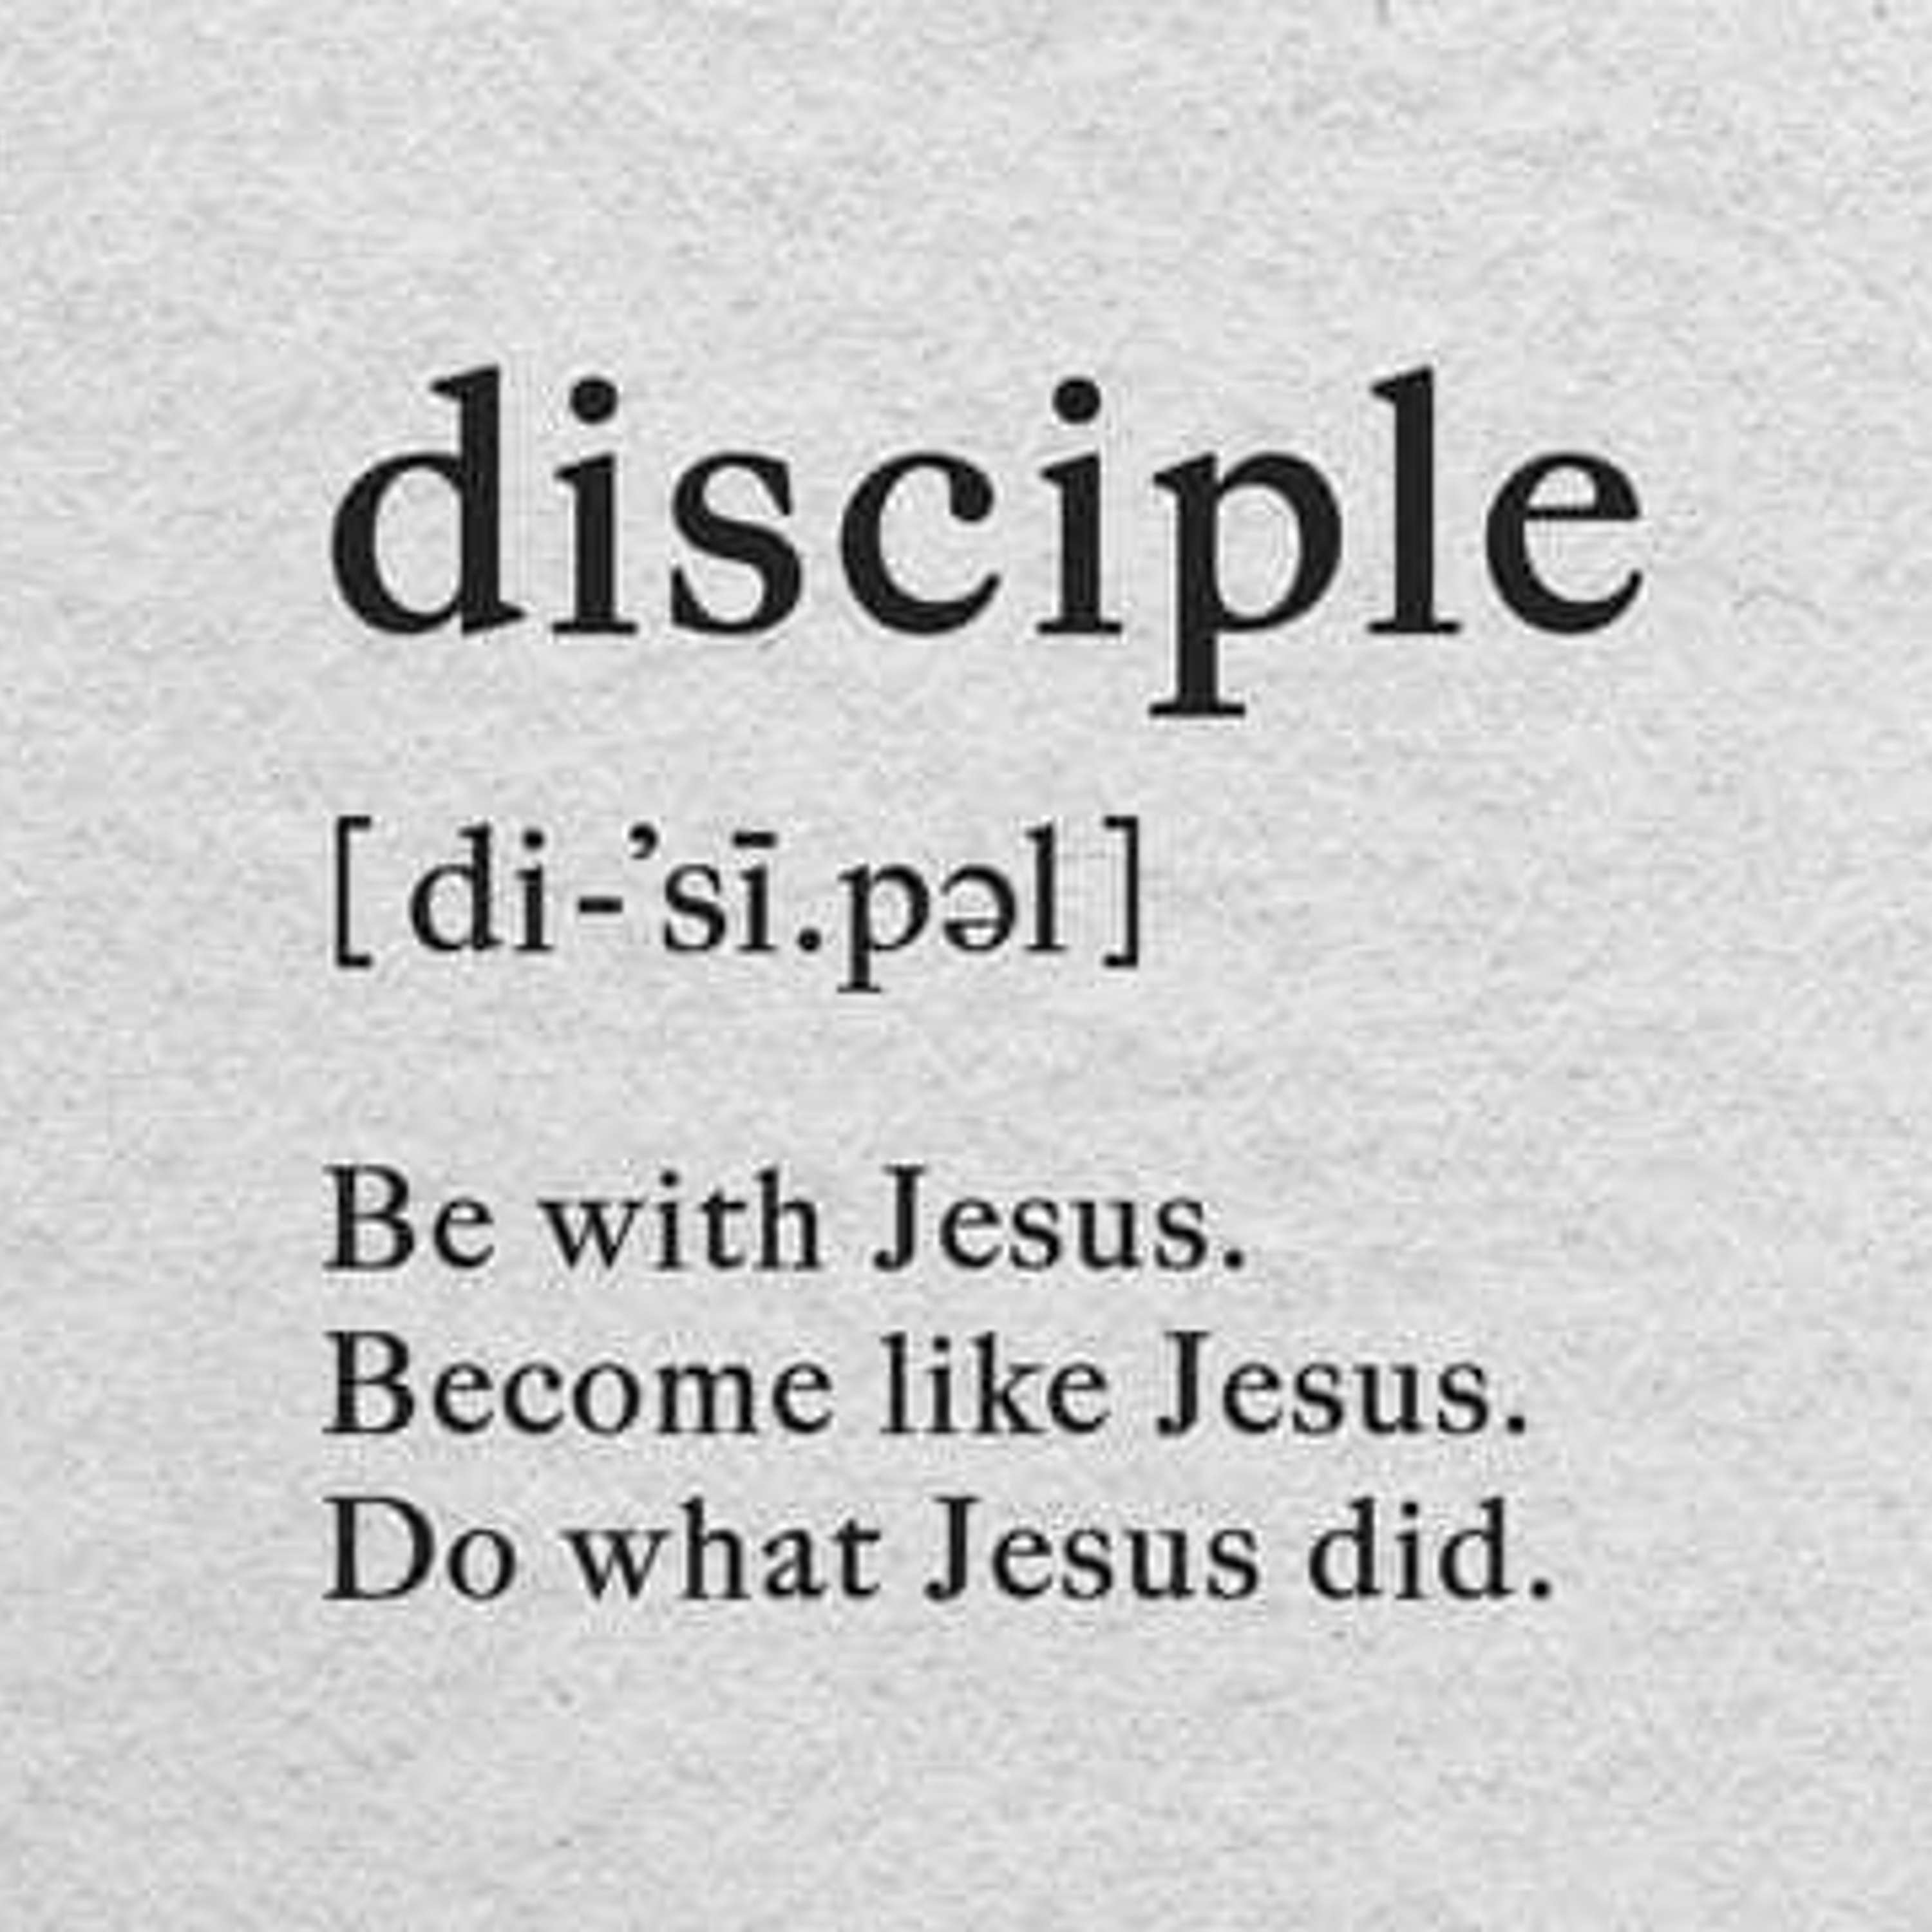 Disciple - Relational, not Informational